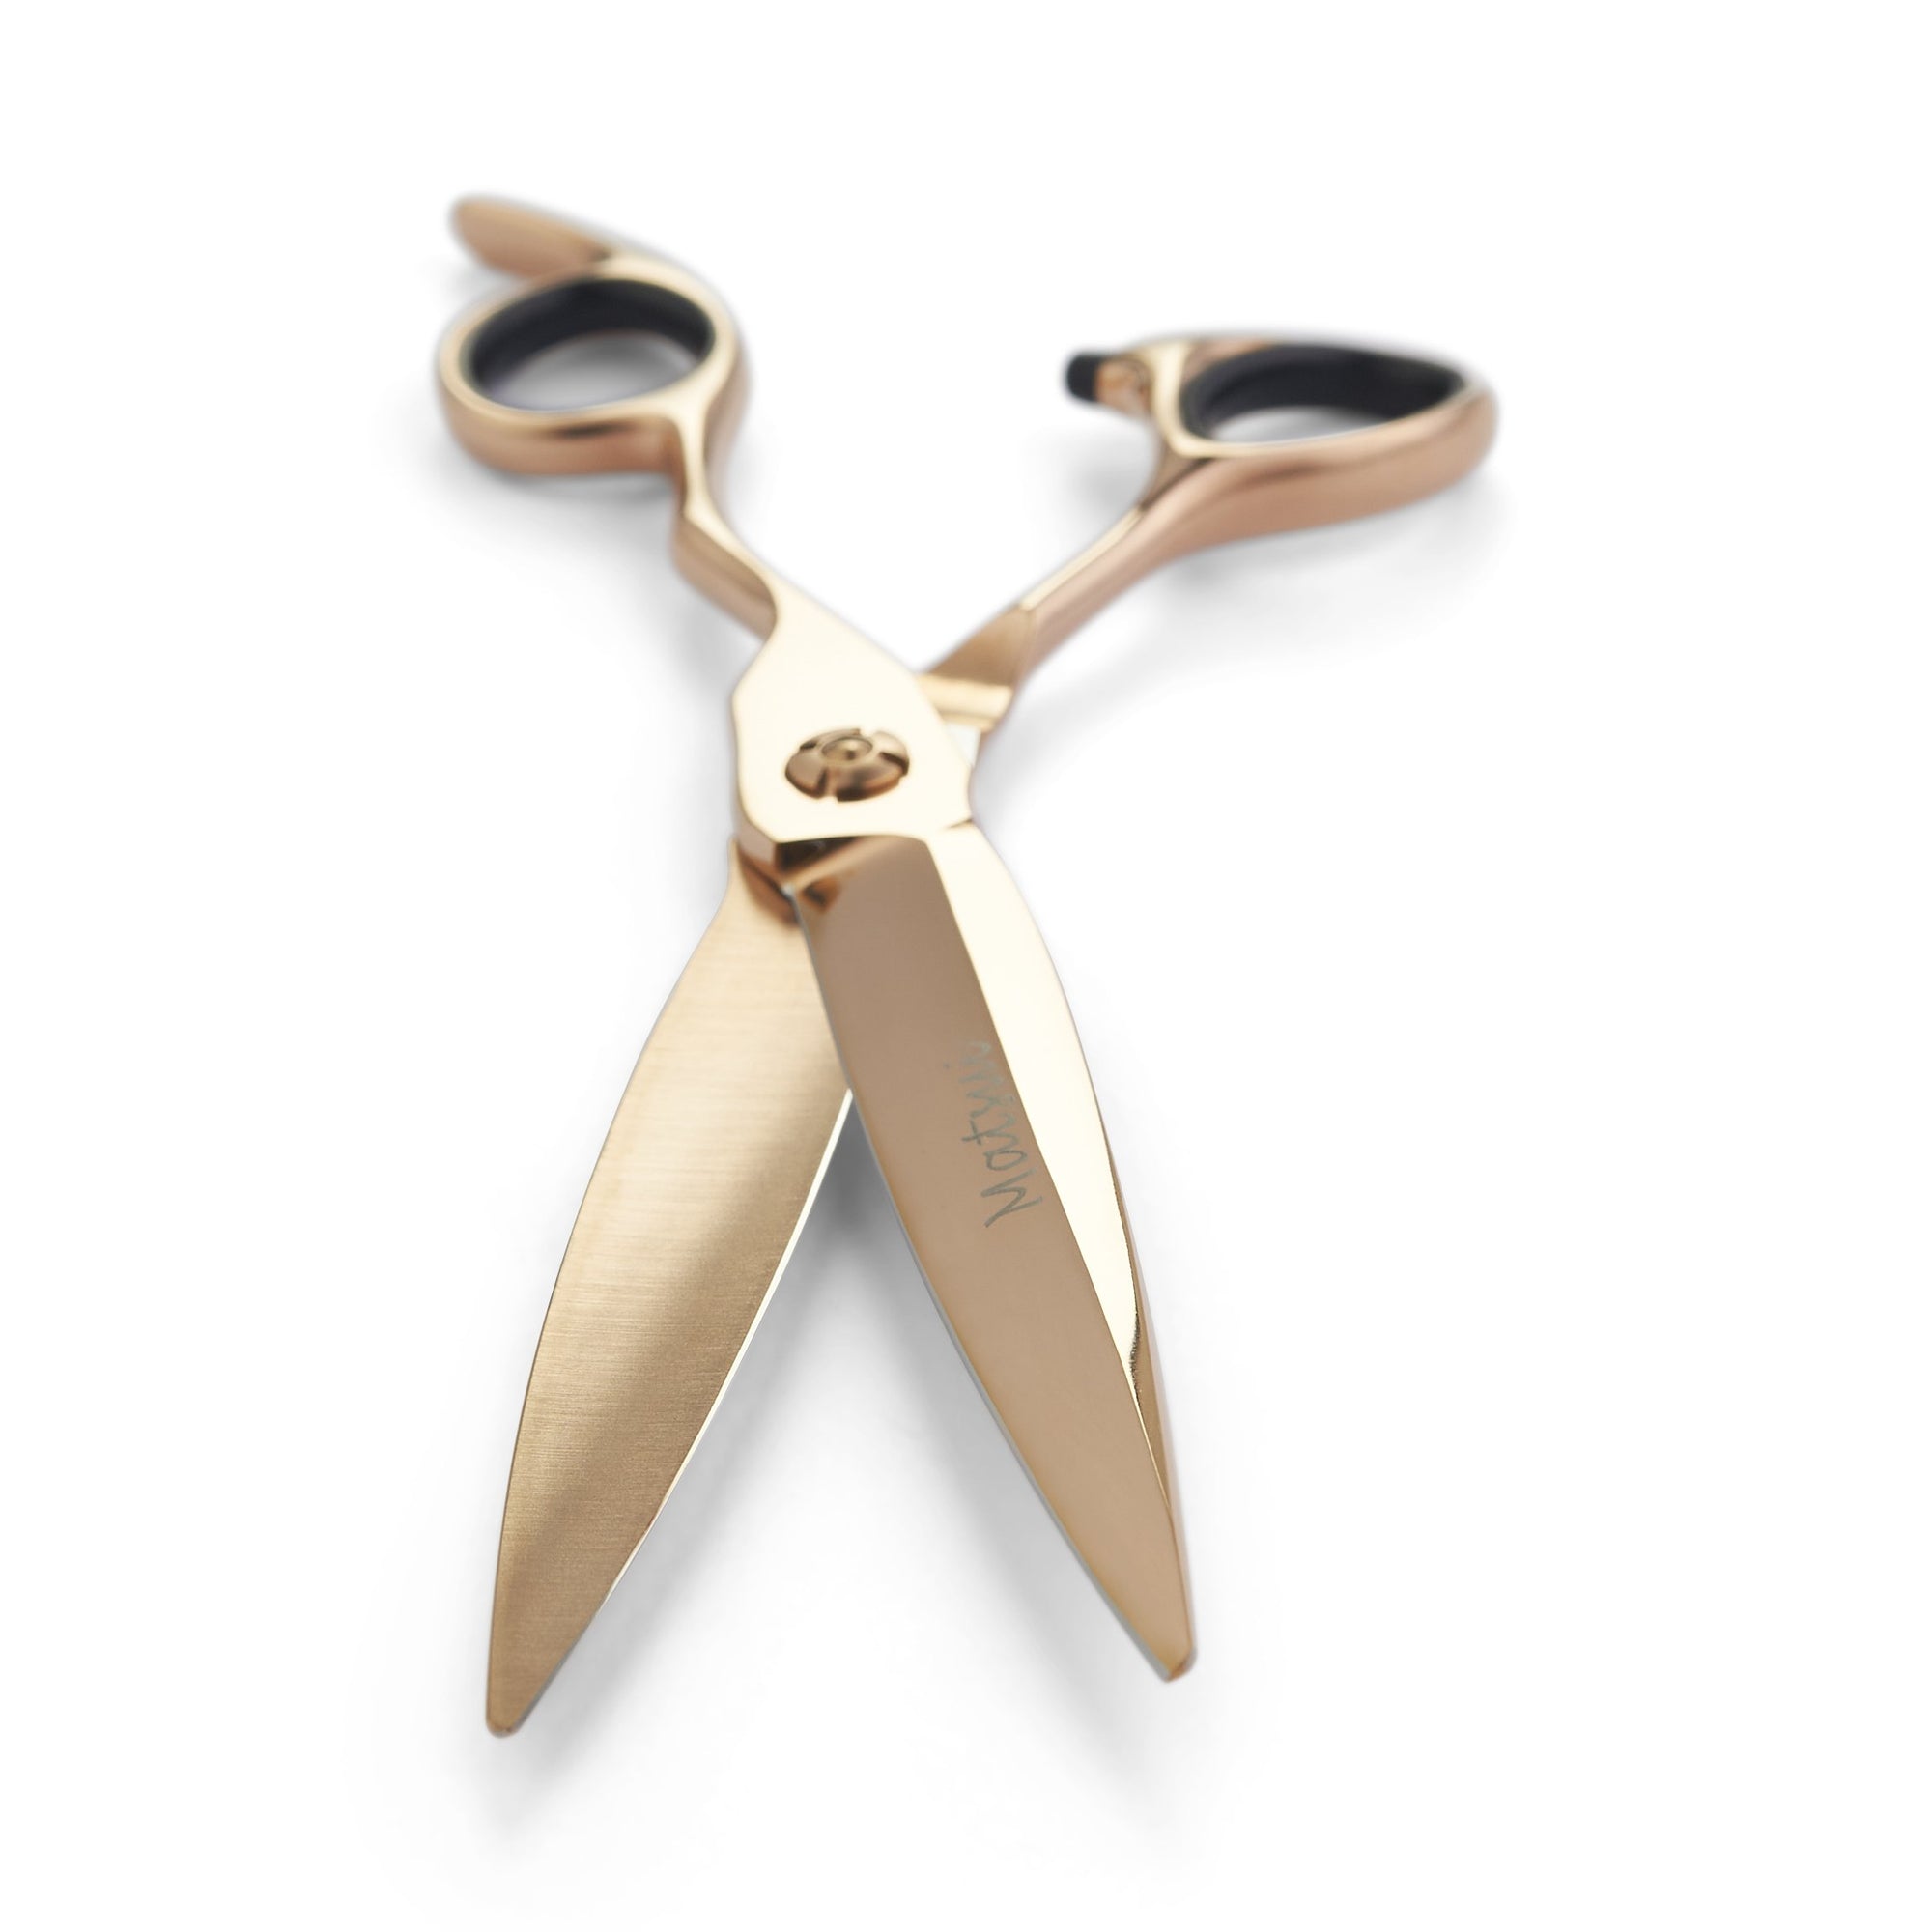 6 inch Matsui VG10 Sword Scissor Thinner Combo - Rose Gold - Scissor Tech Canada (4729456525366)